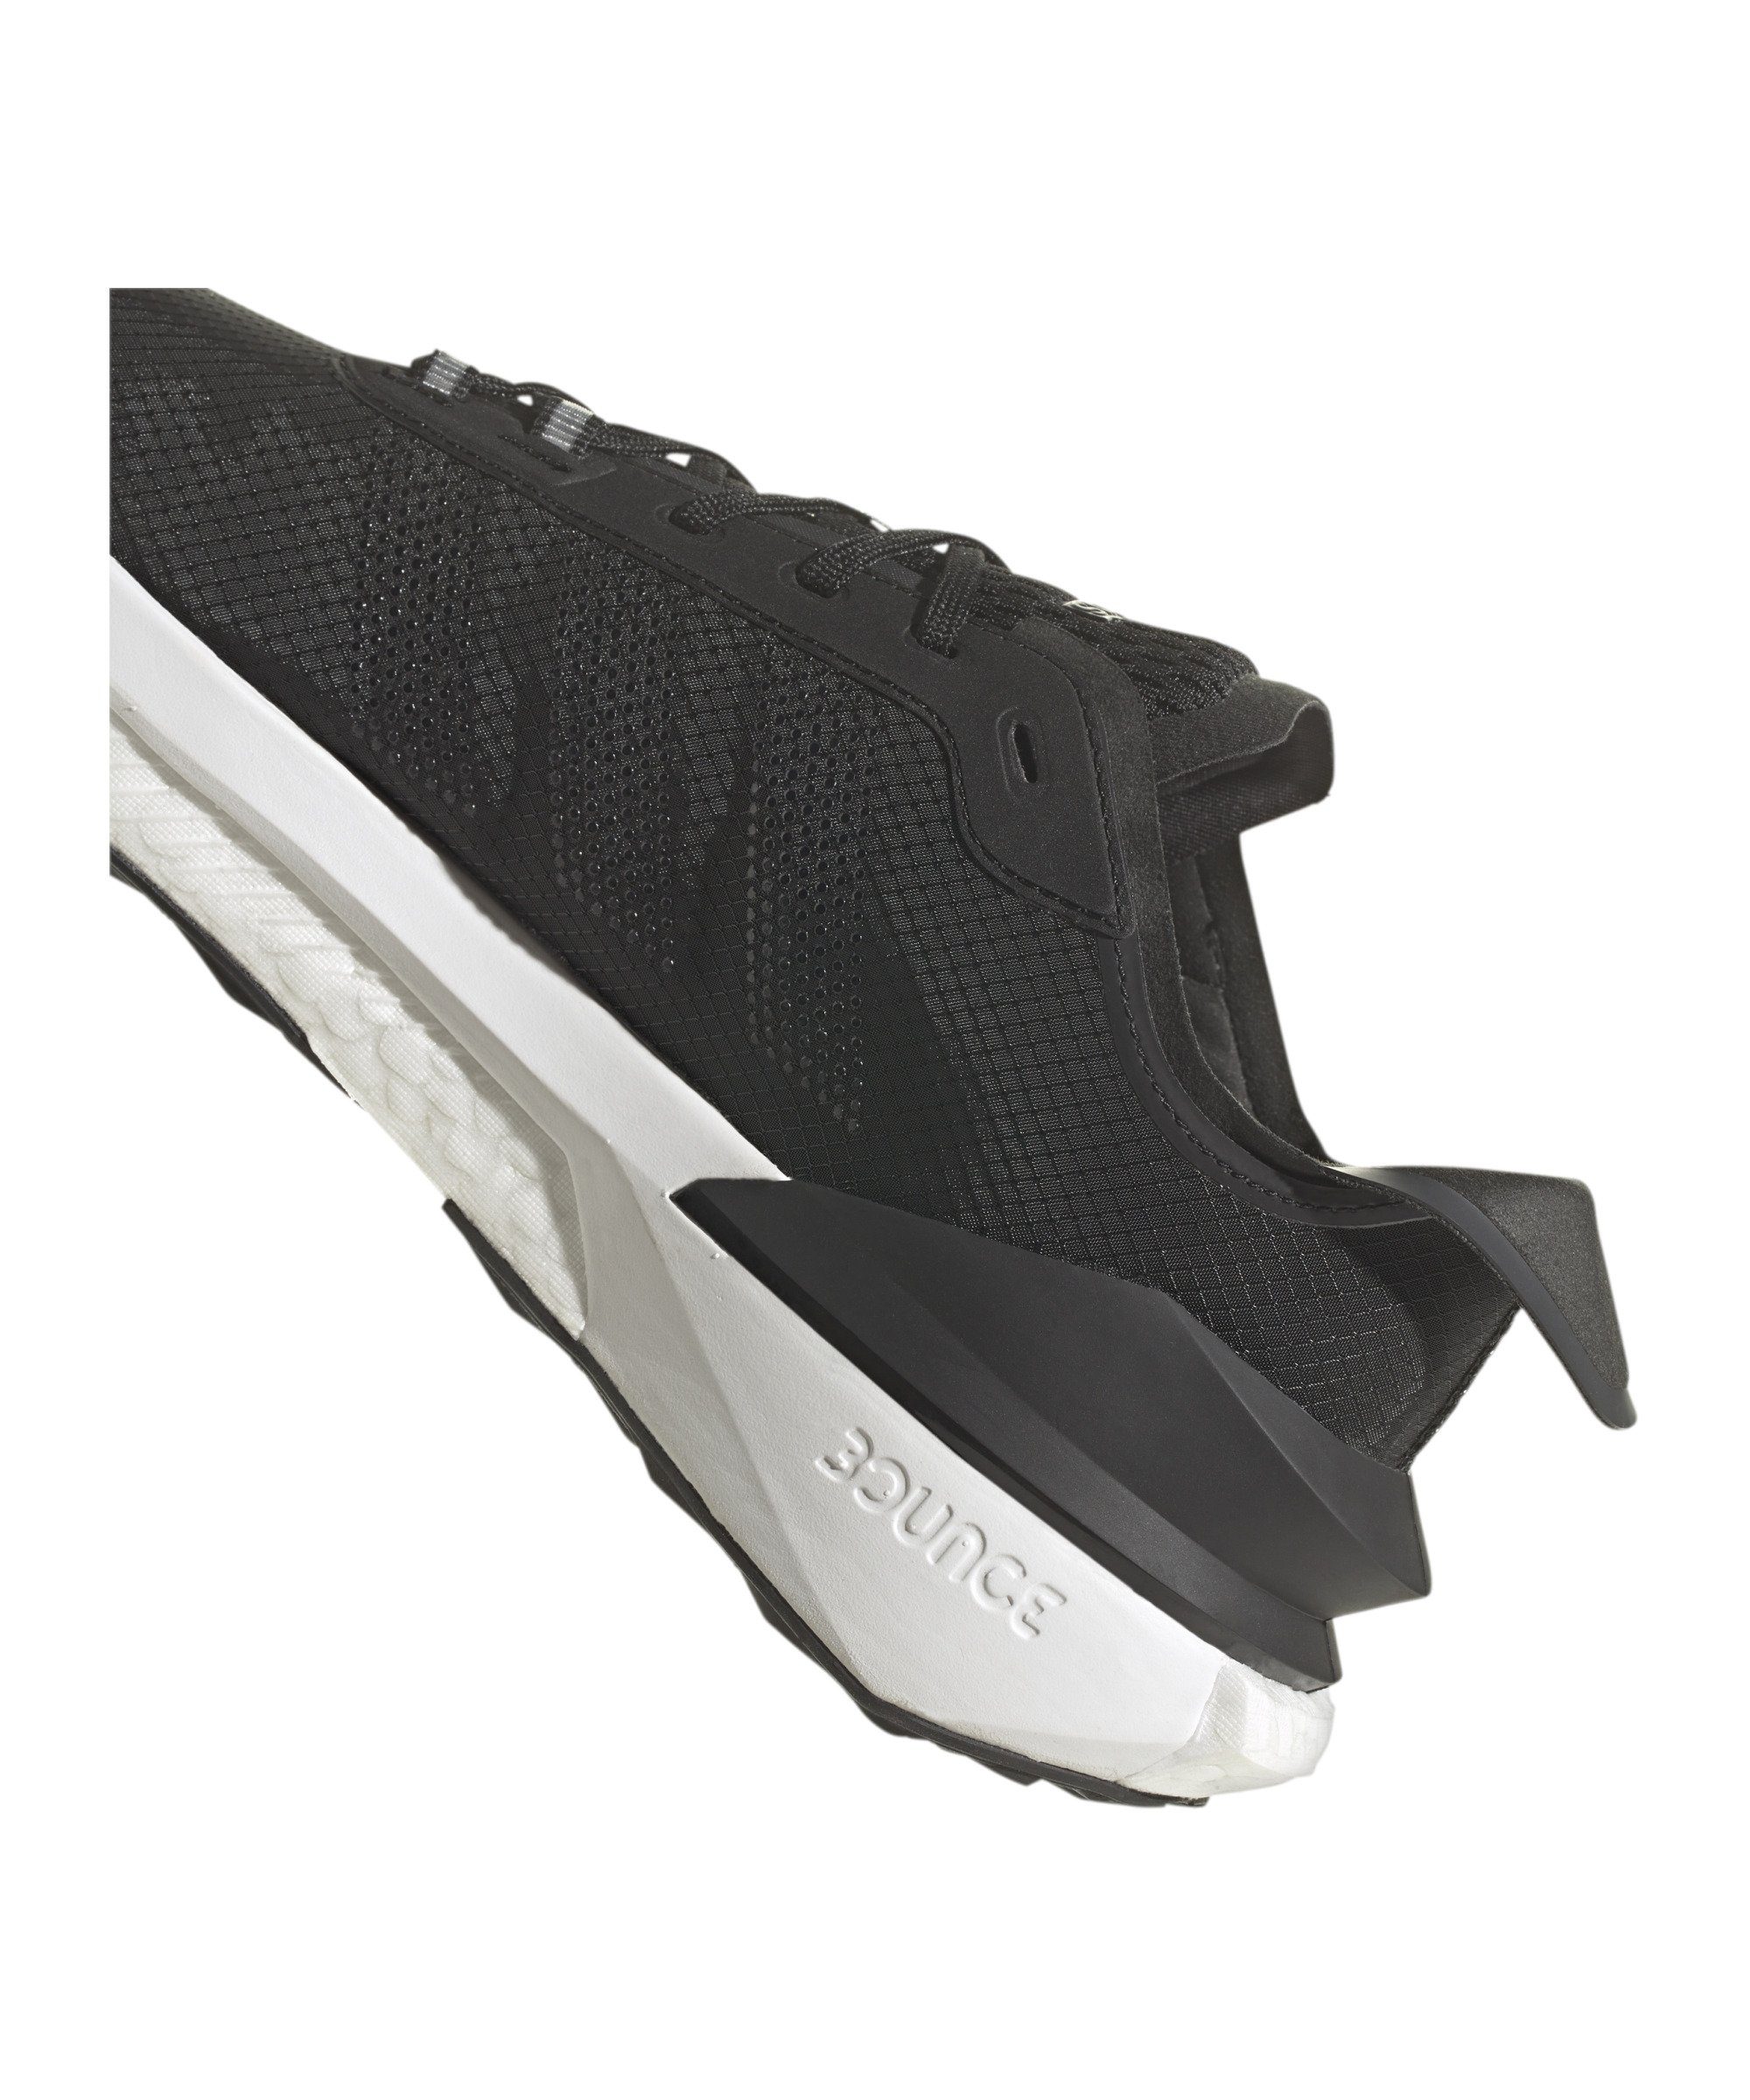 Avryn adidas Sneaker schwarzgraugrau Performance